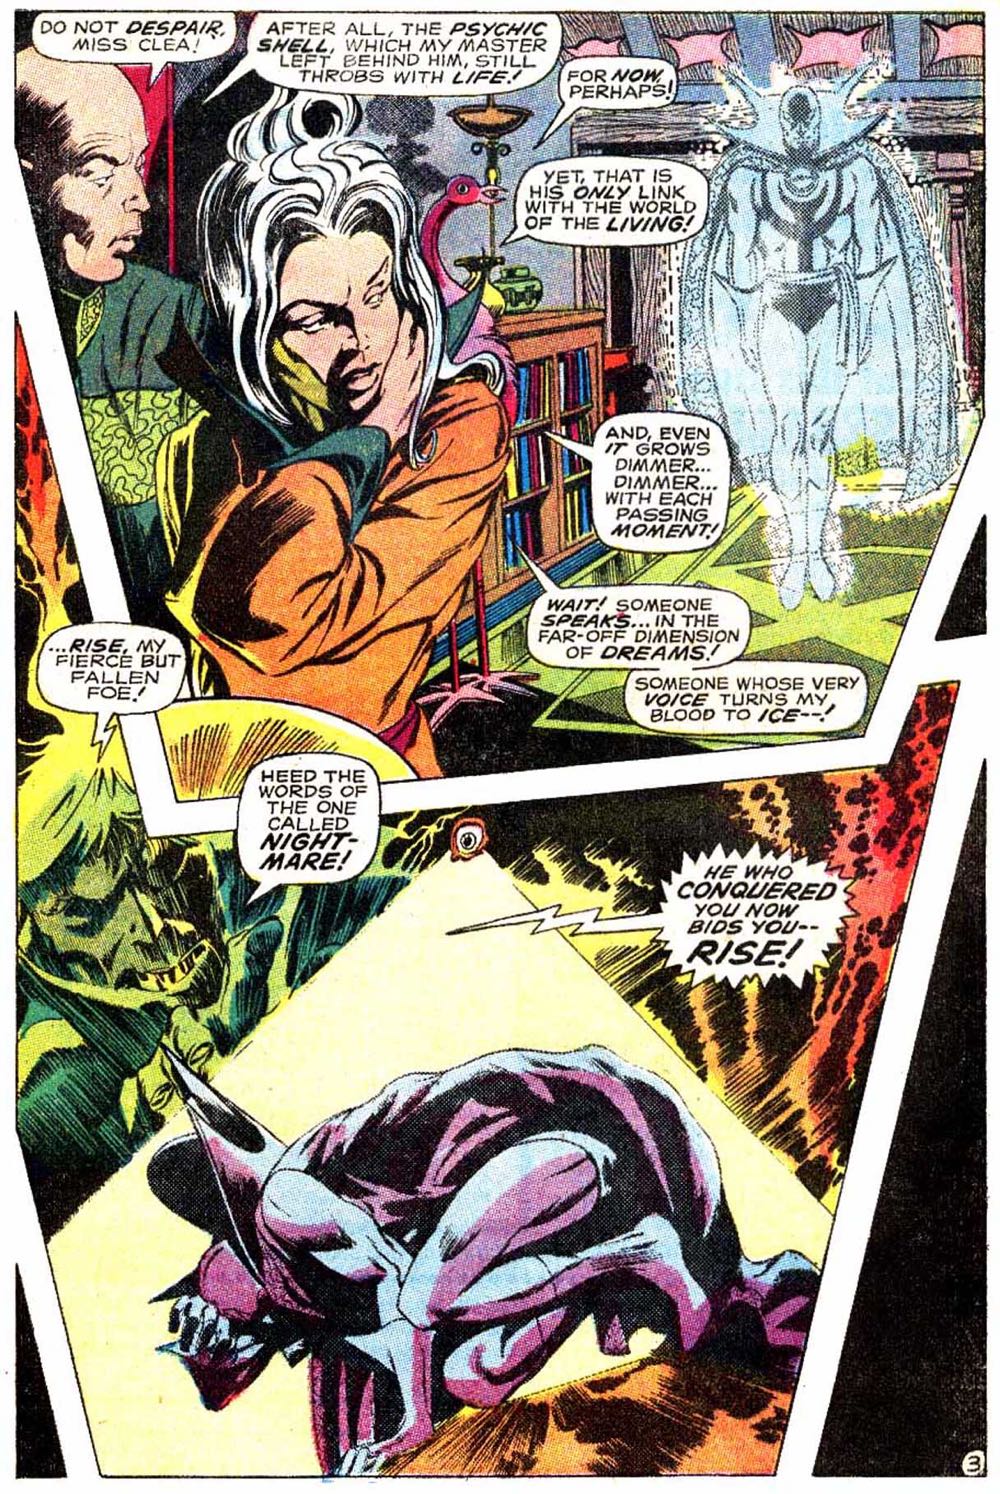 Doctor Strange - Marvel Comics (182 - 09/1969) comic book collectible - Main Image 3